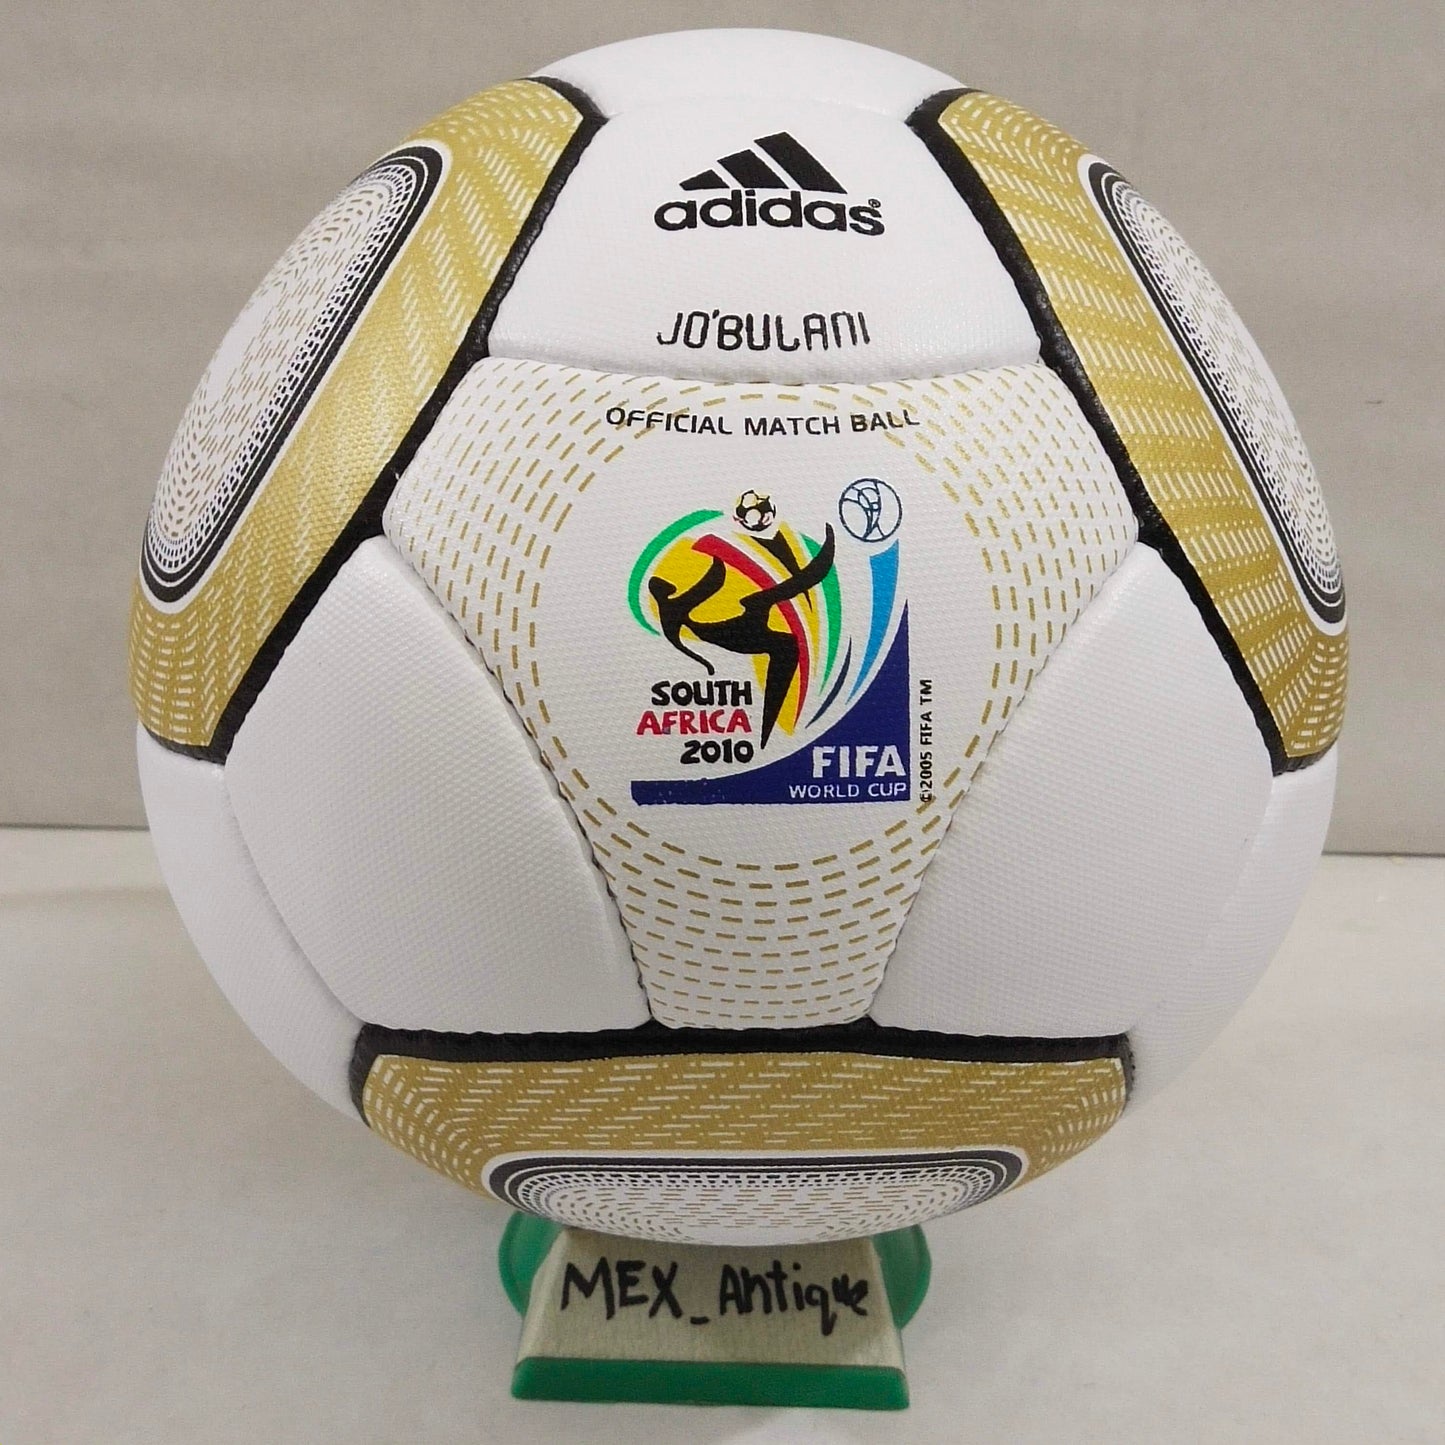 Adidas Jo'bulani | Final Ball | 2010 FIFA World Cup Ball | SIZE 5 05